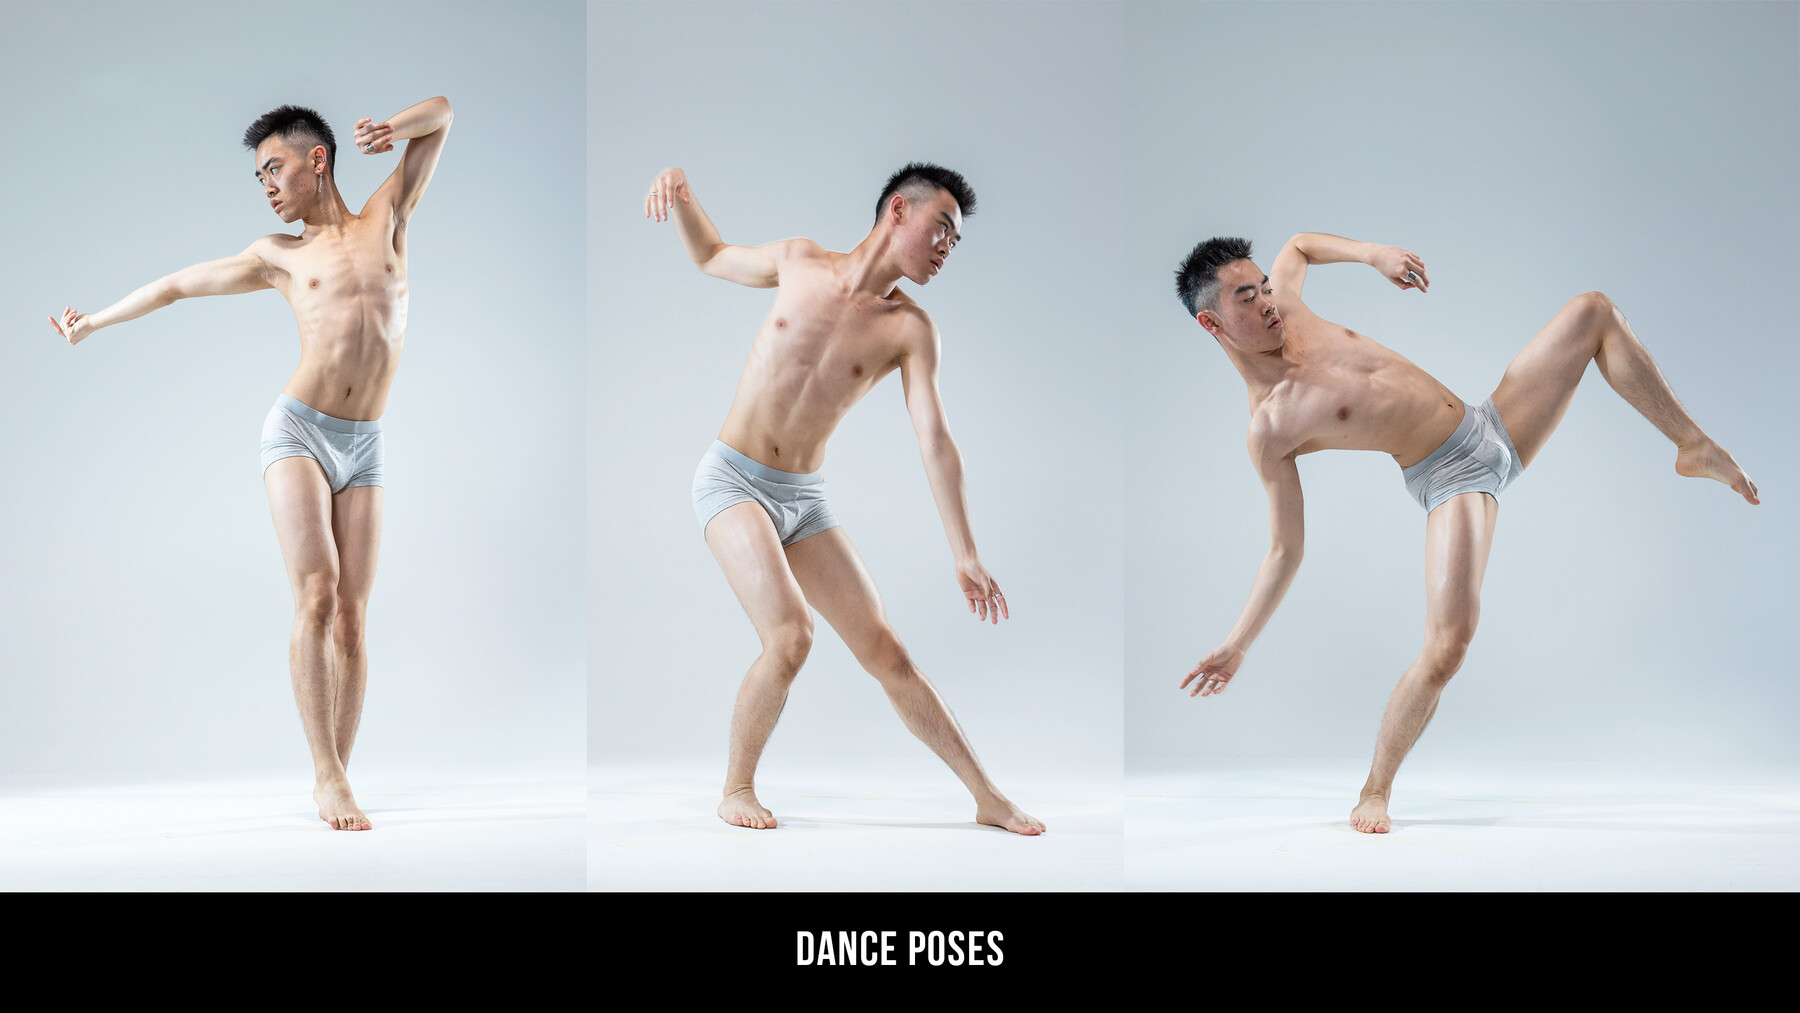 Pose Studies 29 (dancers) Vibrantes - Illustrations ART street